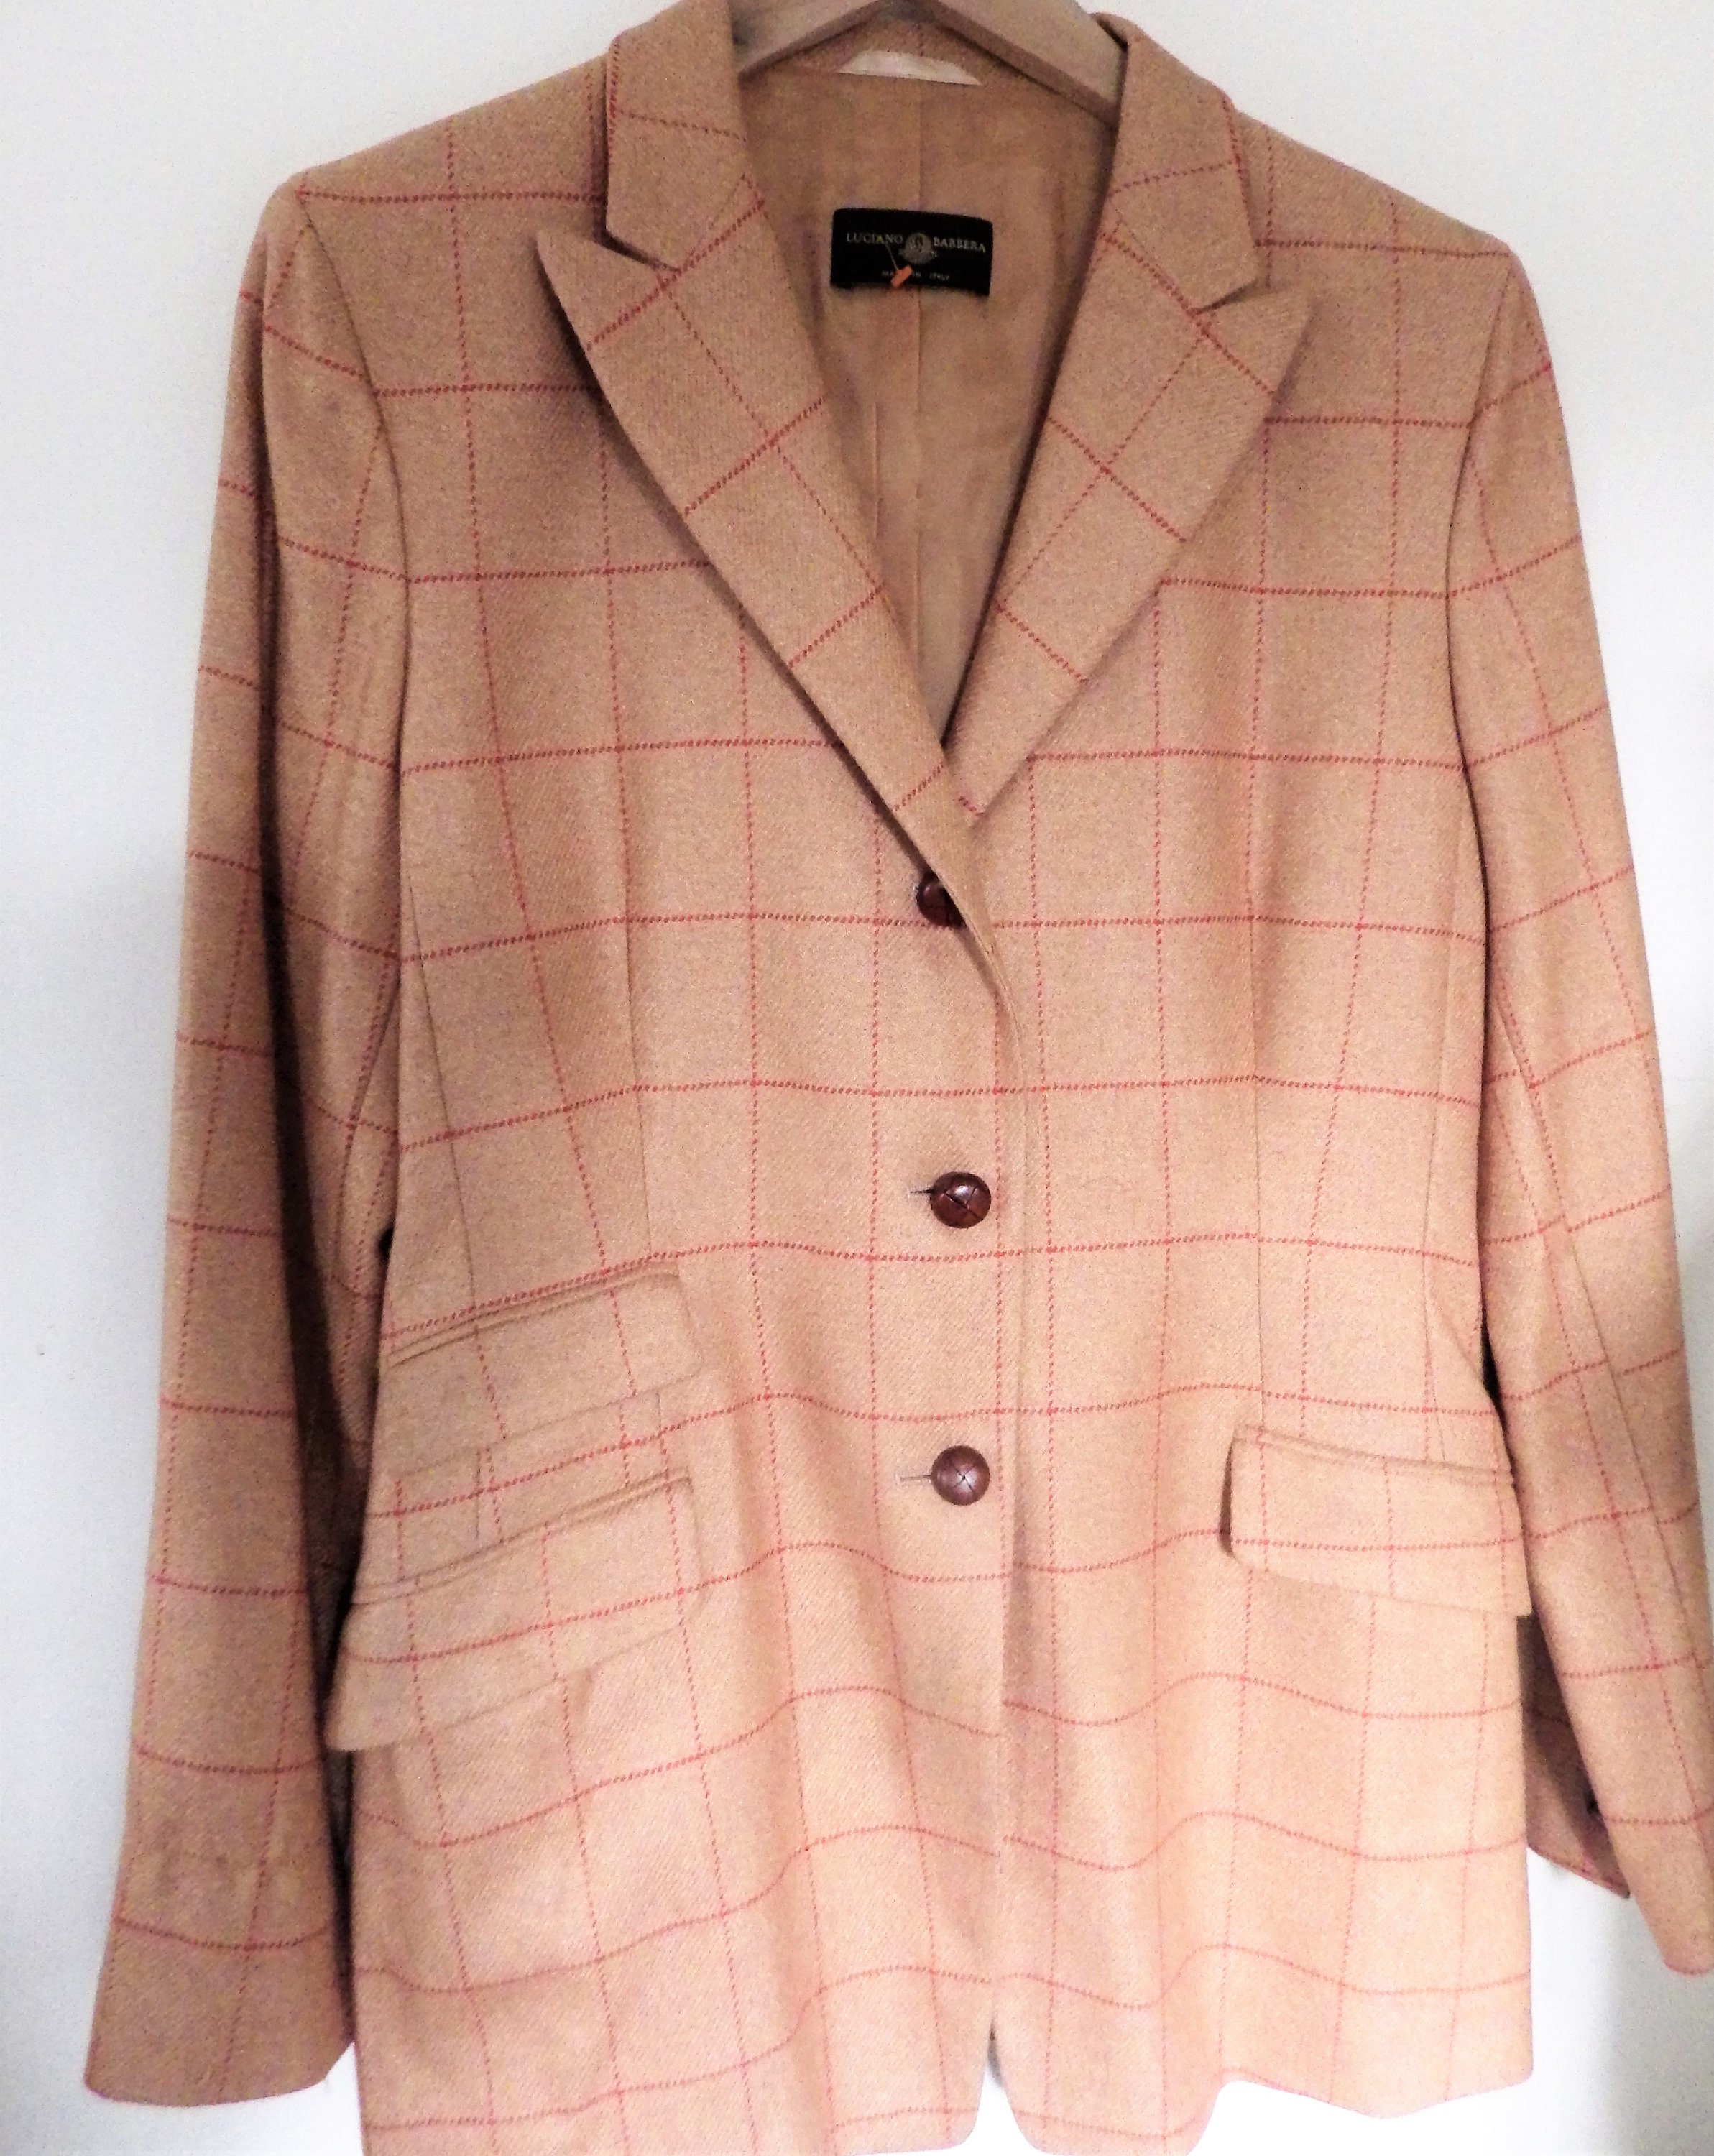 Vintage Cashmere/ Silk Blend Sports Jacket Blazer Size 46